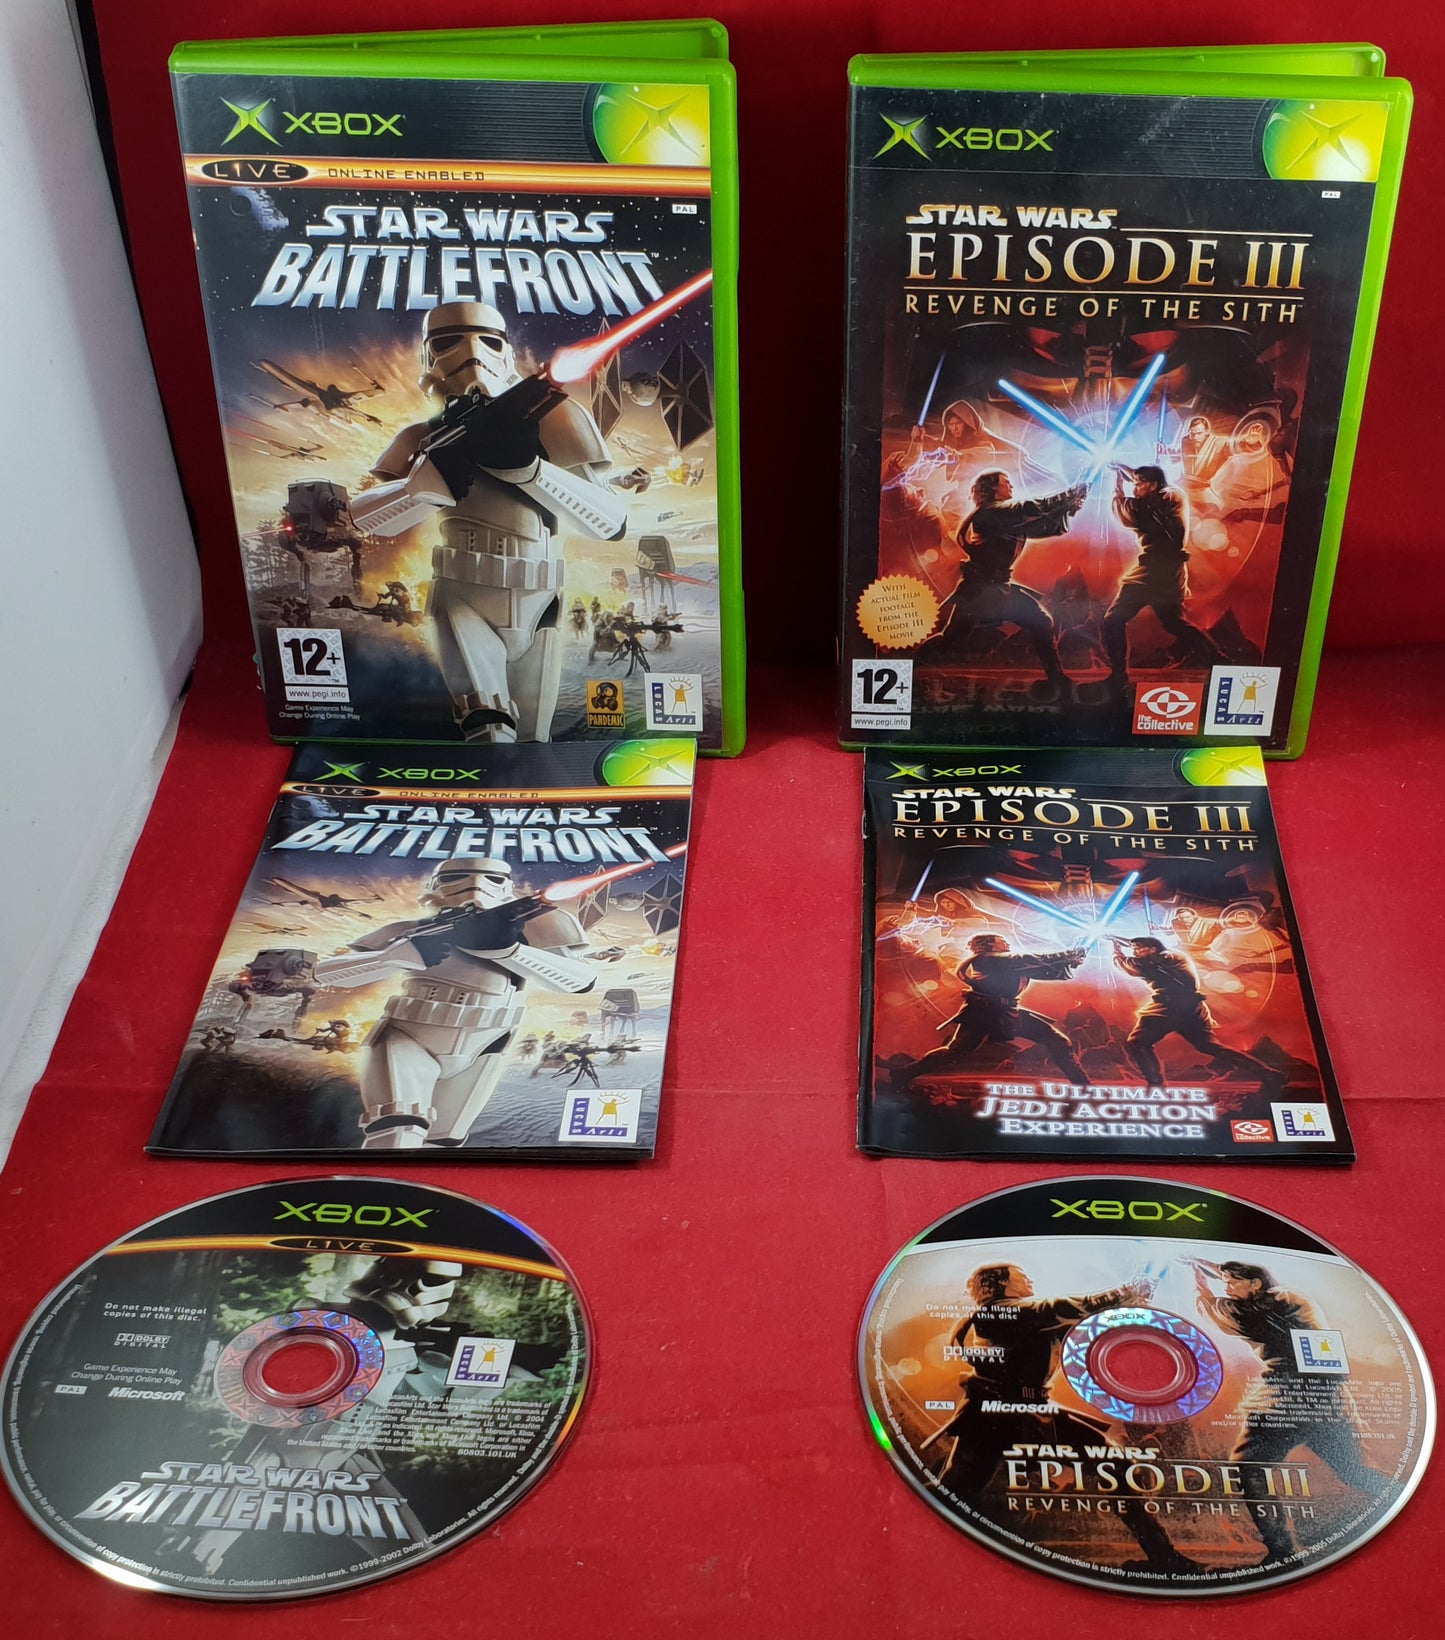 Star Wars Battlefront & Episode III Revenge of the Sith (Microsoft Xbox) Game Bundle